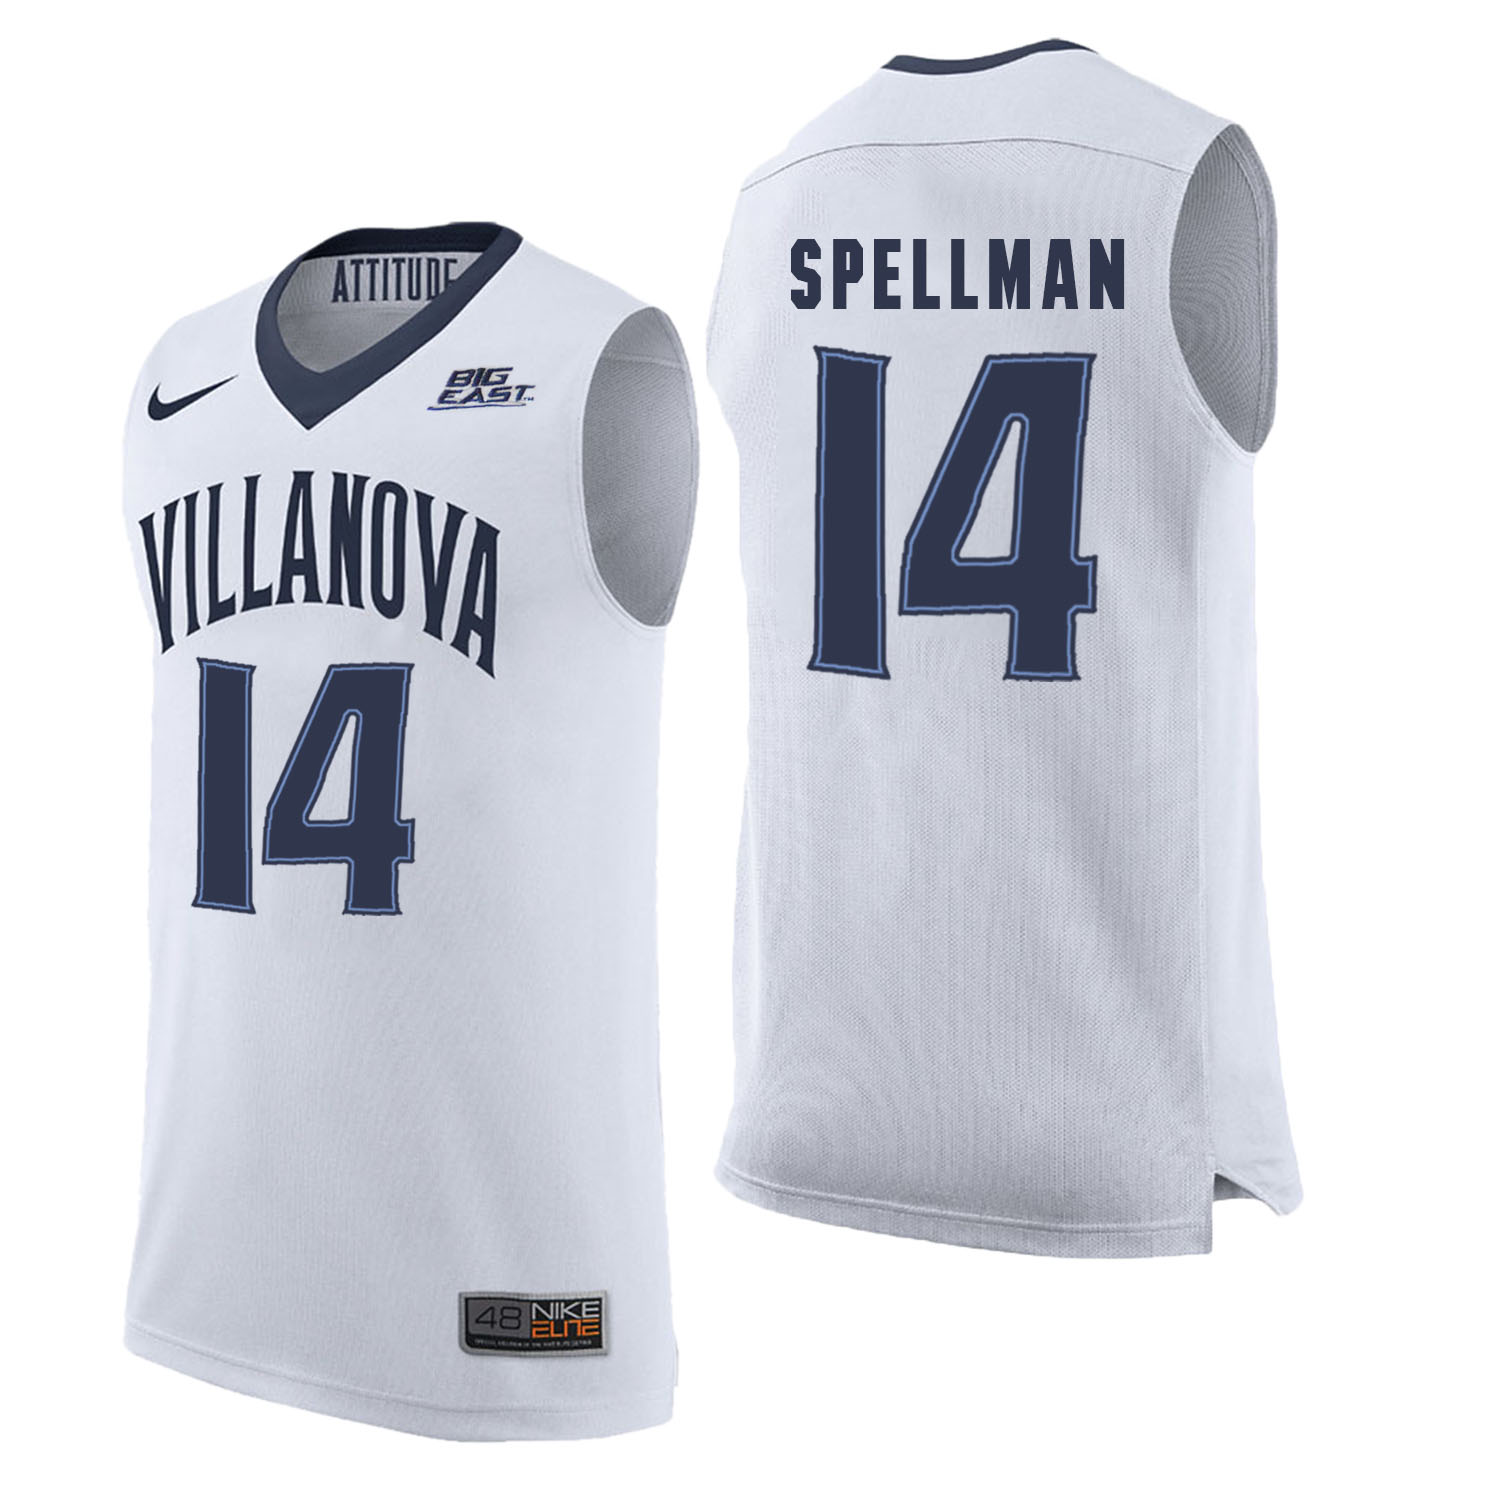 Villanova Wildcats 14 Omari Spellman White College Basketball Elite Jersey